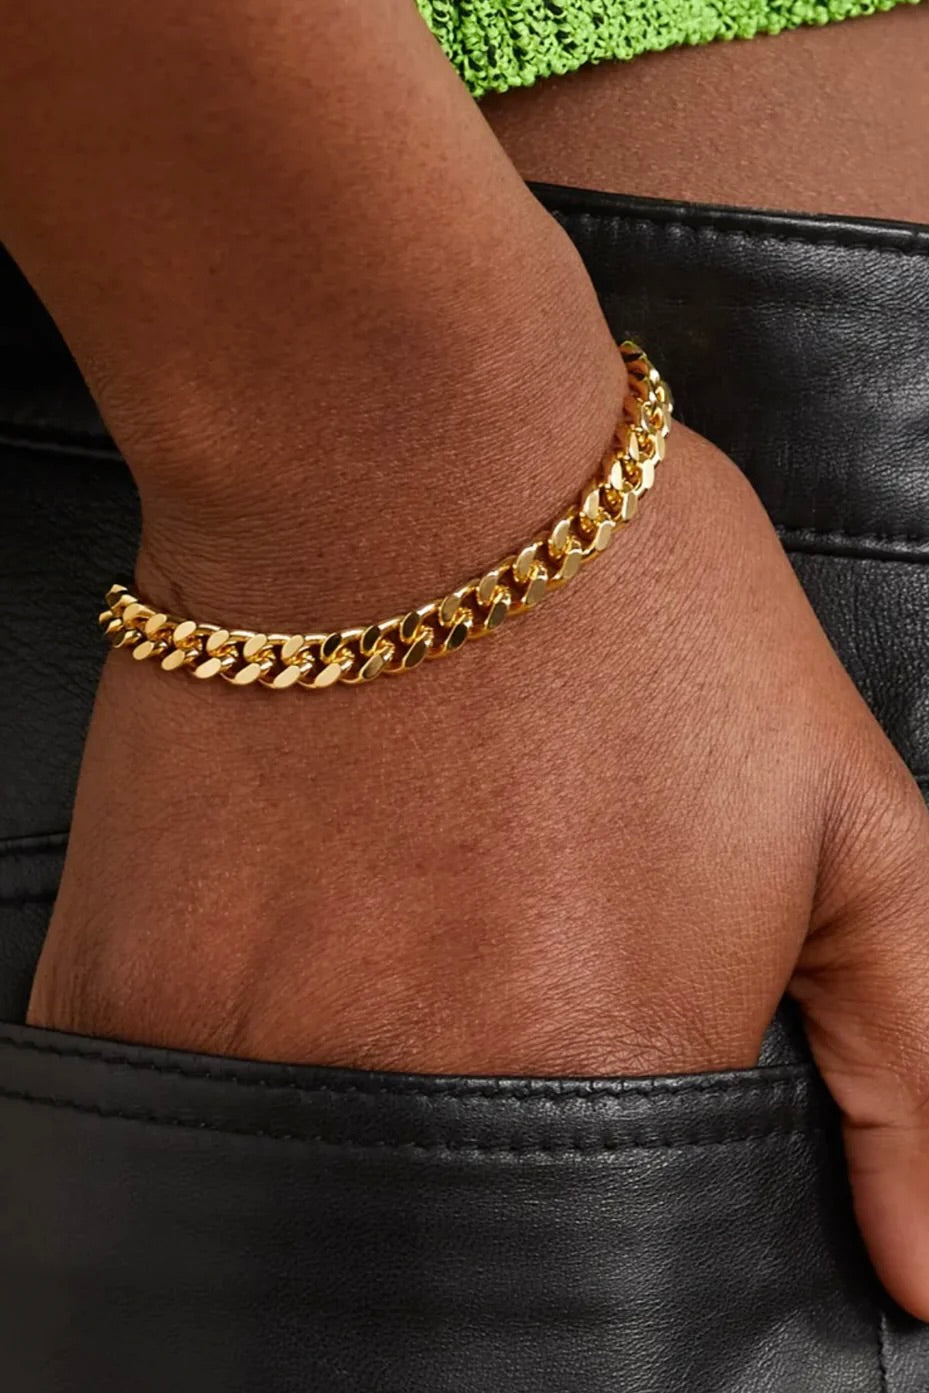 Plain Jane bracelet